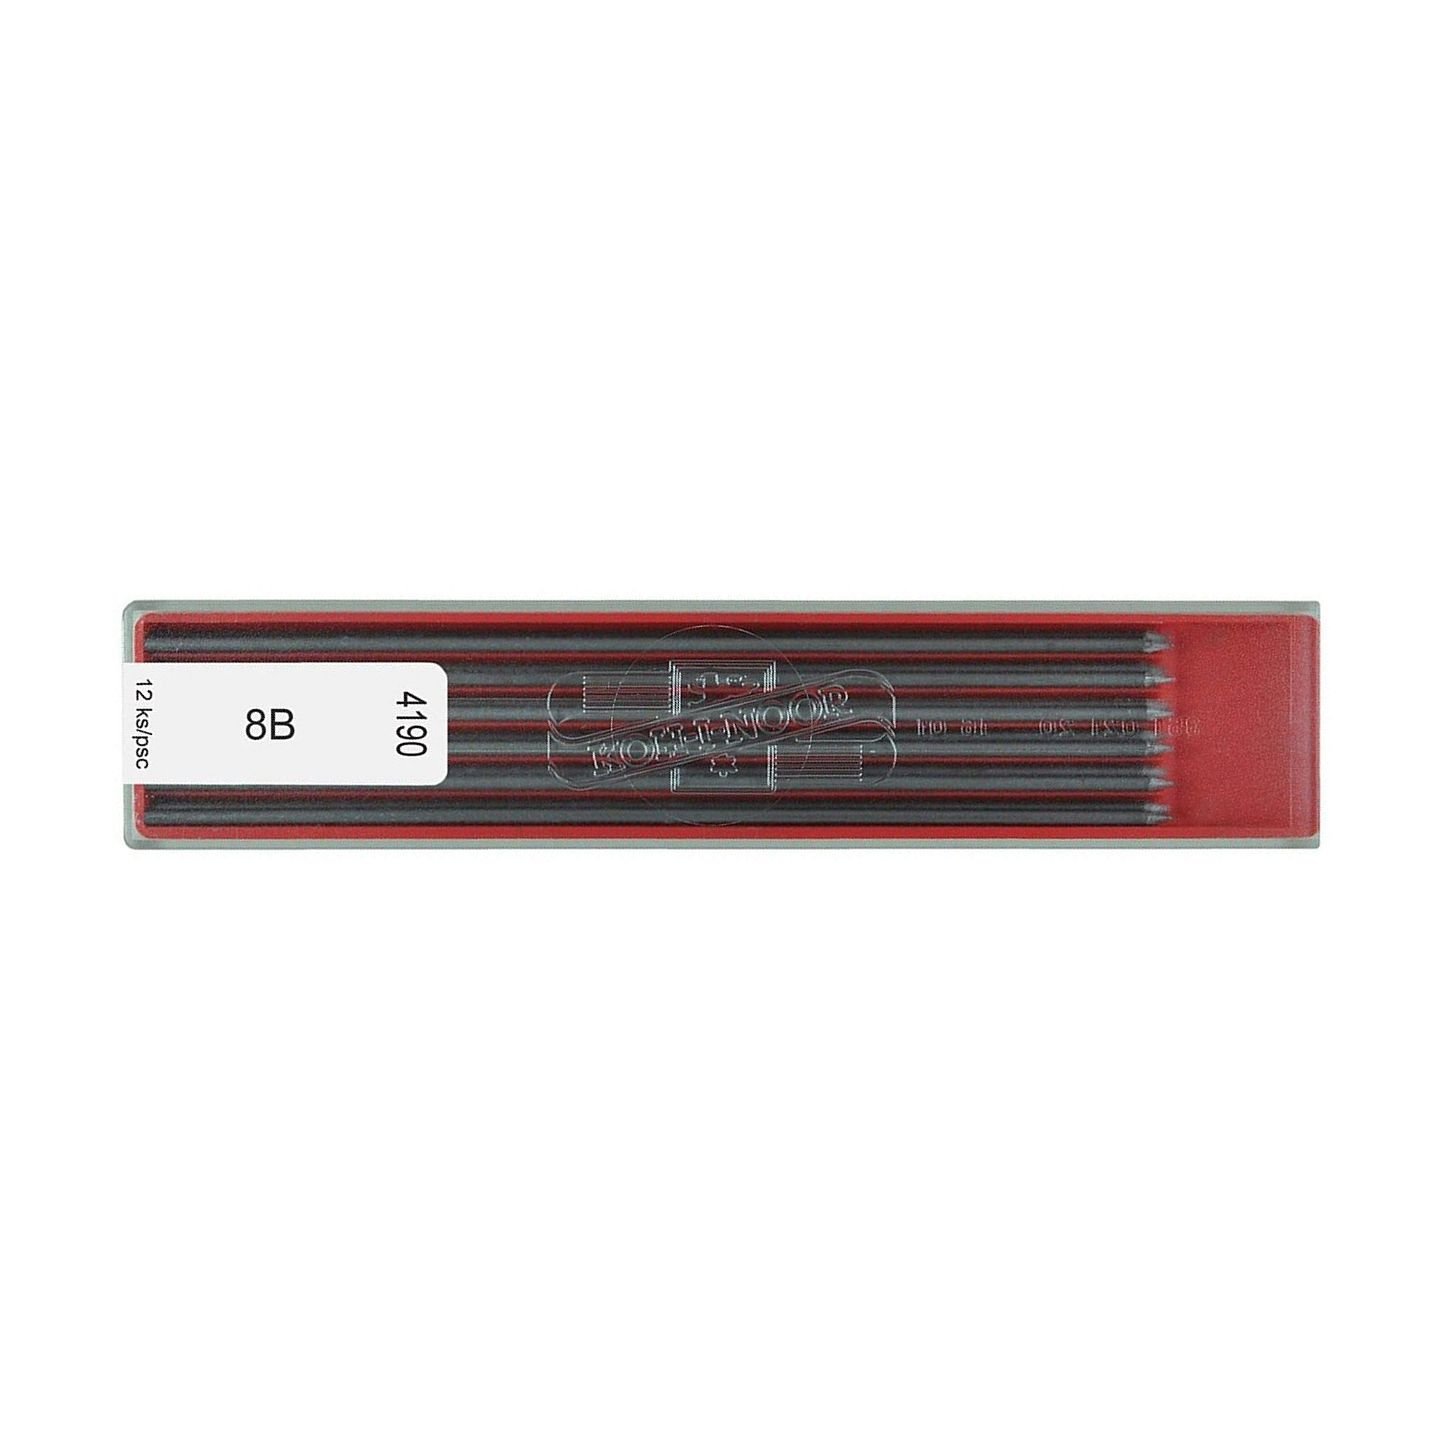 Koh-I-Noor Hardmuth High Quality Graphite Pencil Lead - Grade 8B - Lead Diameter 2 mm - Pack of 12